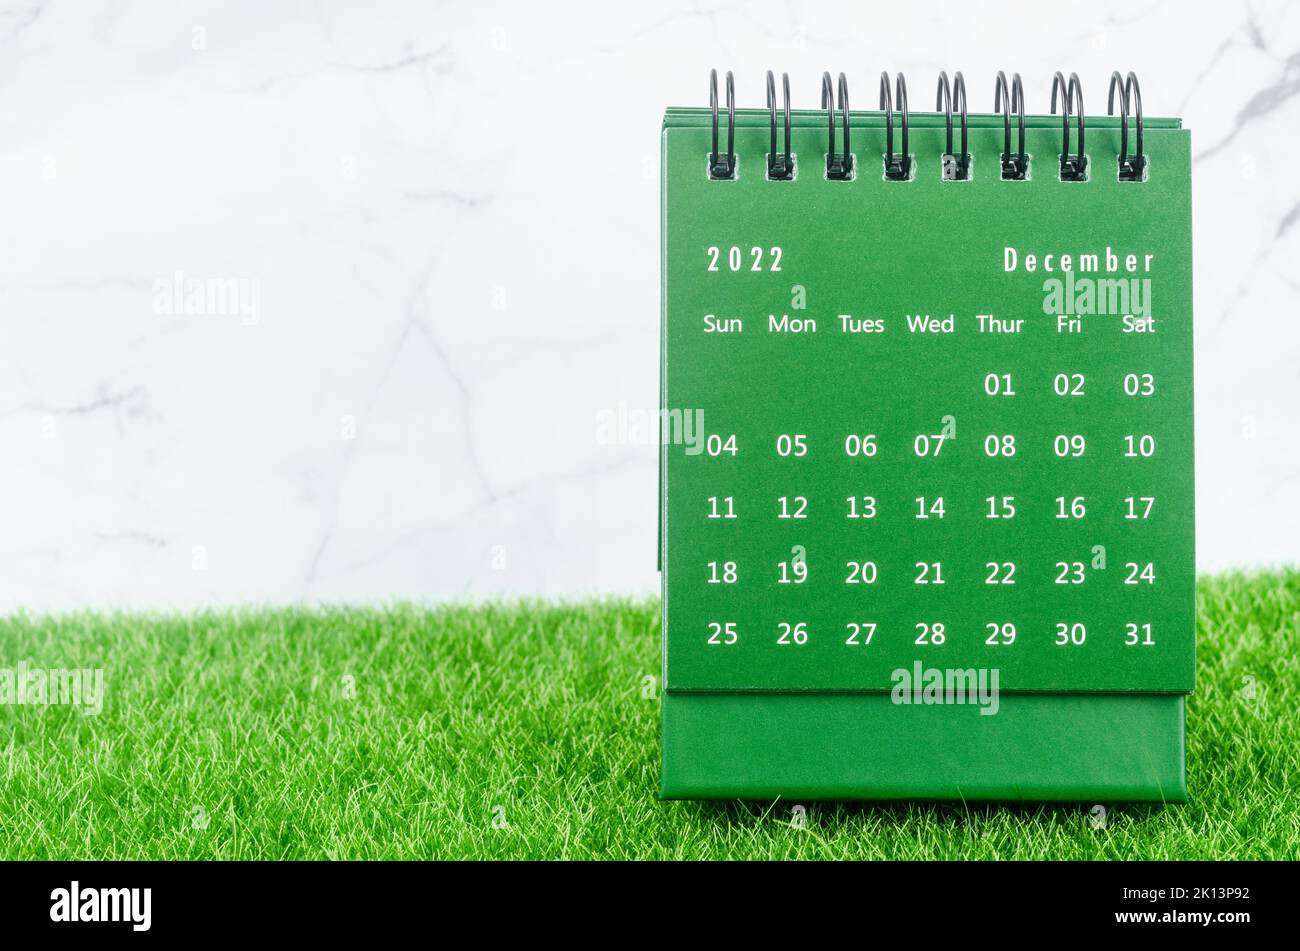 Green December 2022 Monthly desk calendar for 2022 year on grass. Stock Photo